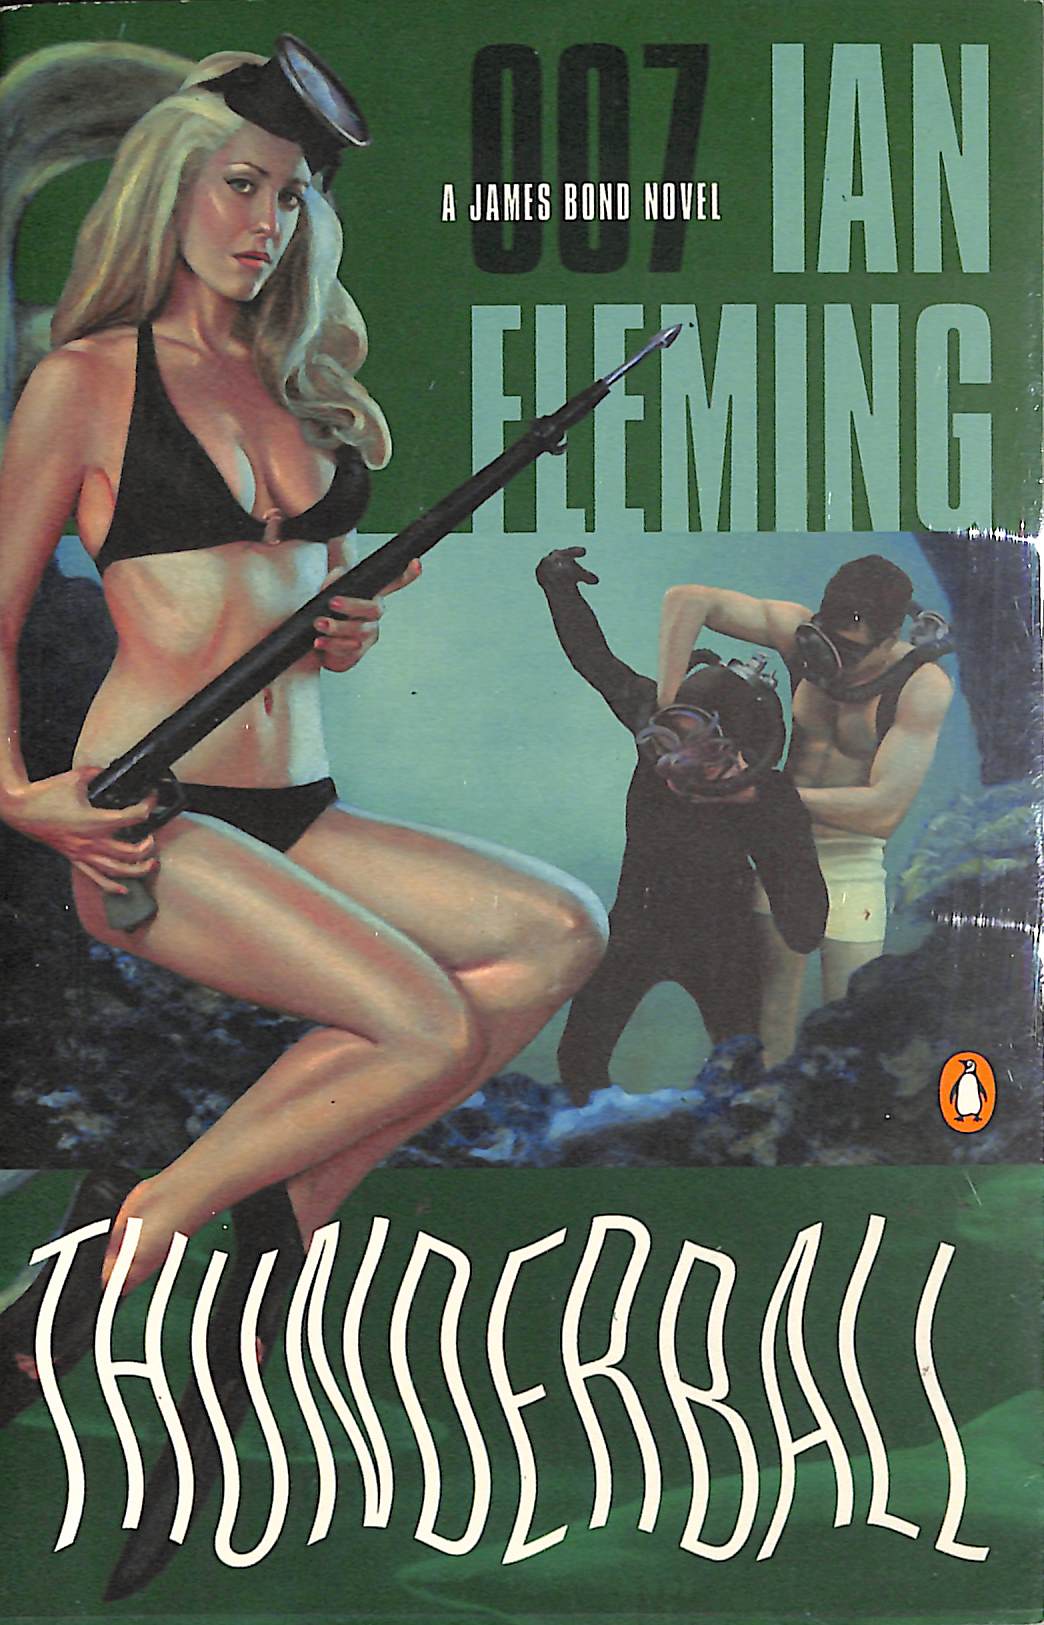 "Thunderball" 2003 FLEMING, Ian (SOLD)